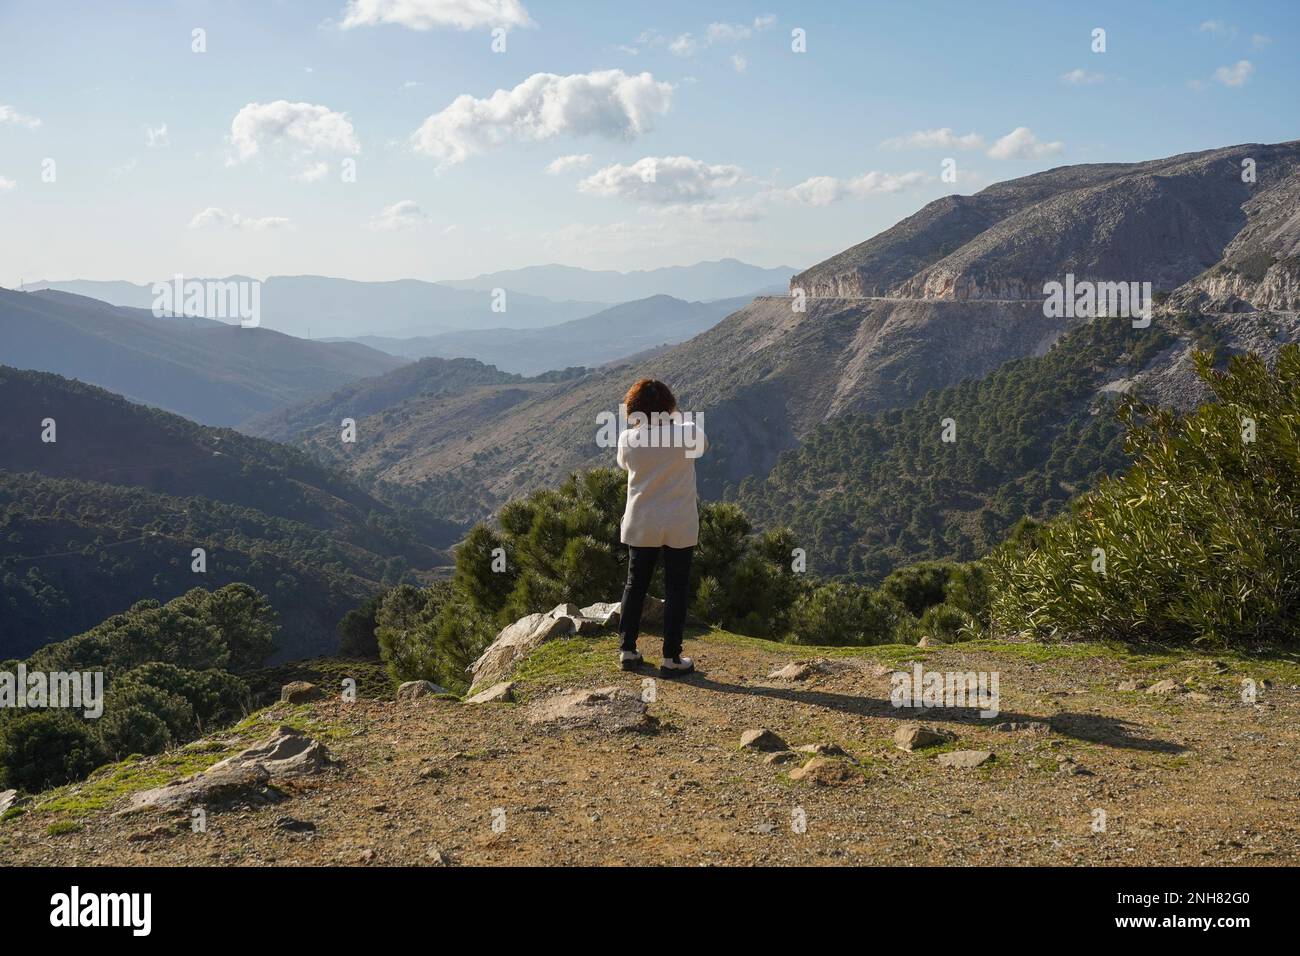 Woman making photo with mobile, in mountain area Serrania de ronda, Spain. Stock Photo